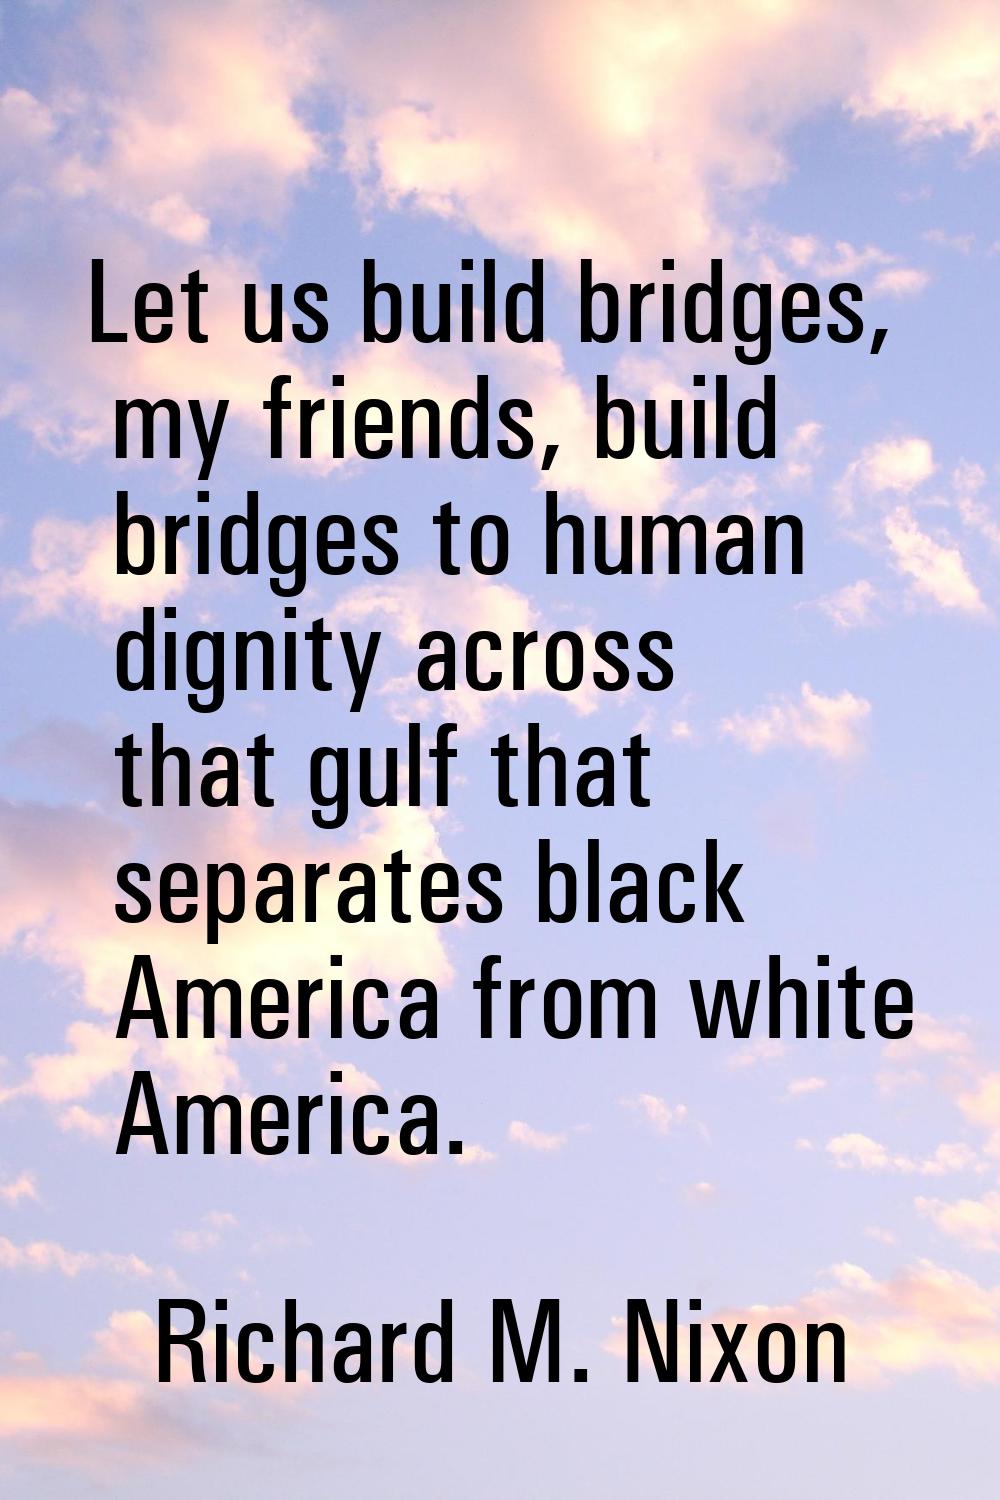 Let us build bridges, my friends, build bridges to human dignity across that gulf that separates bl